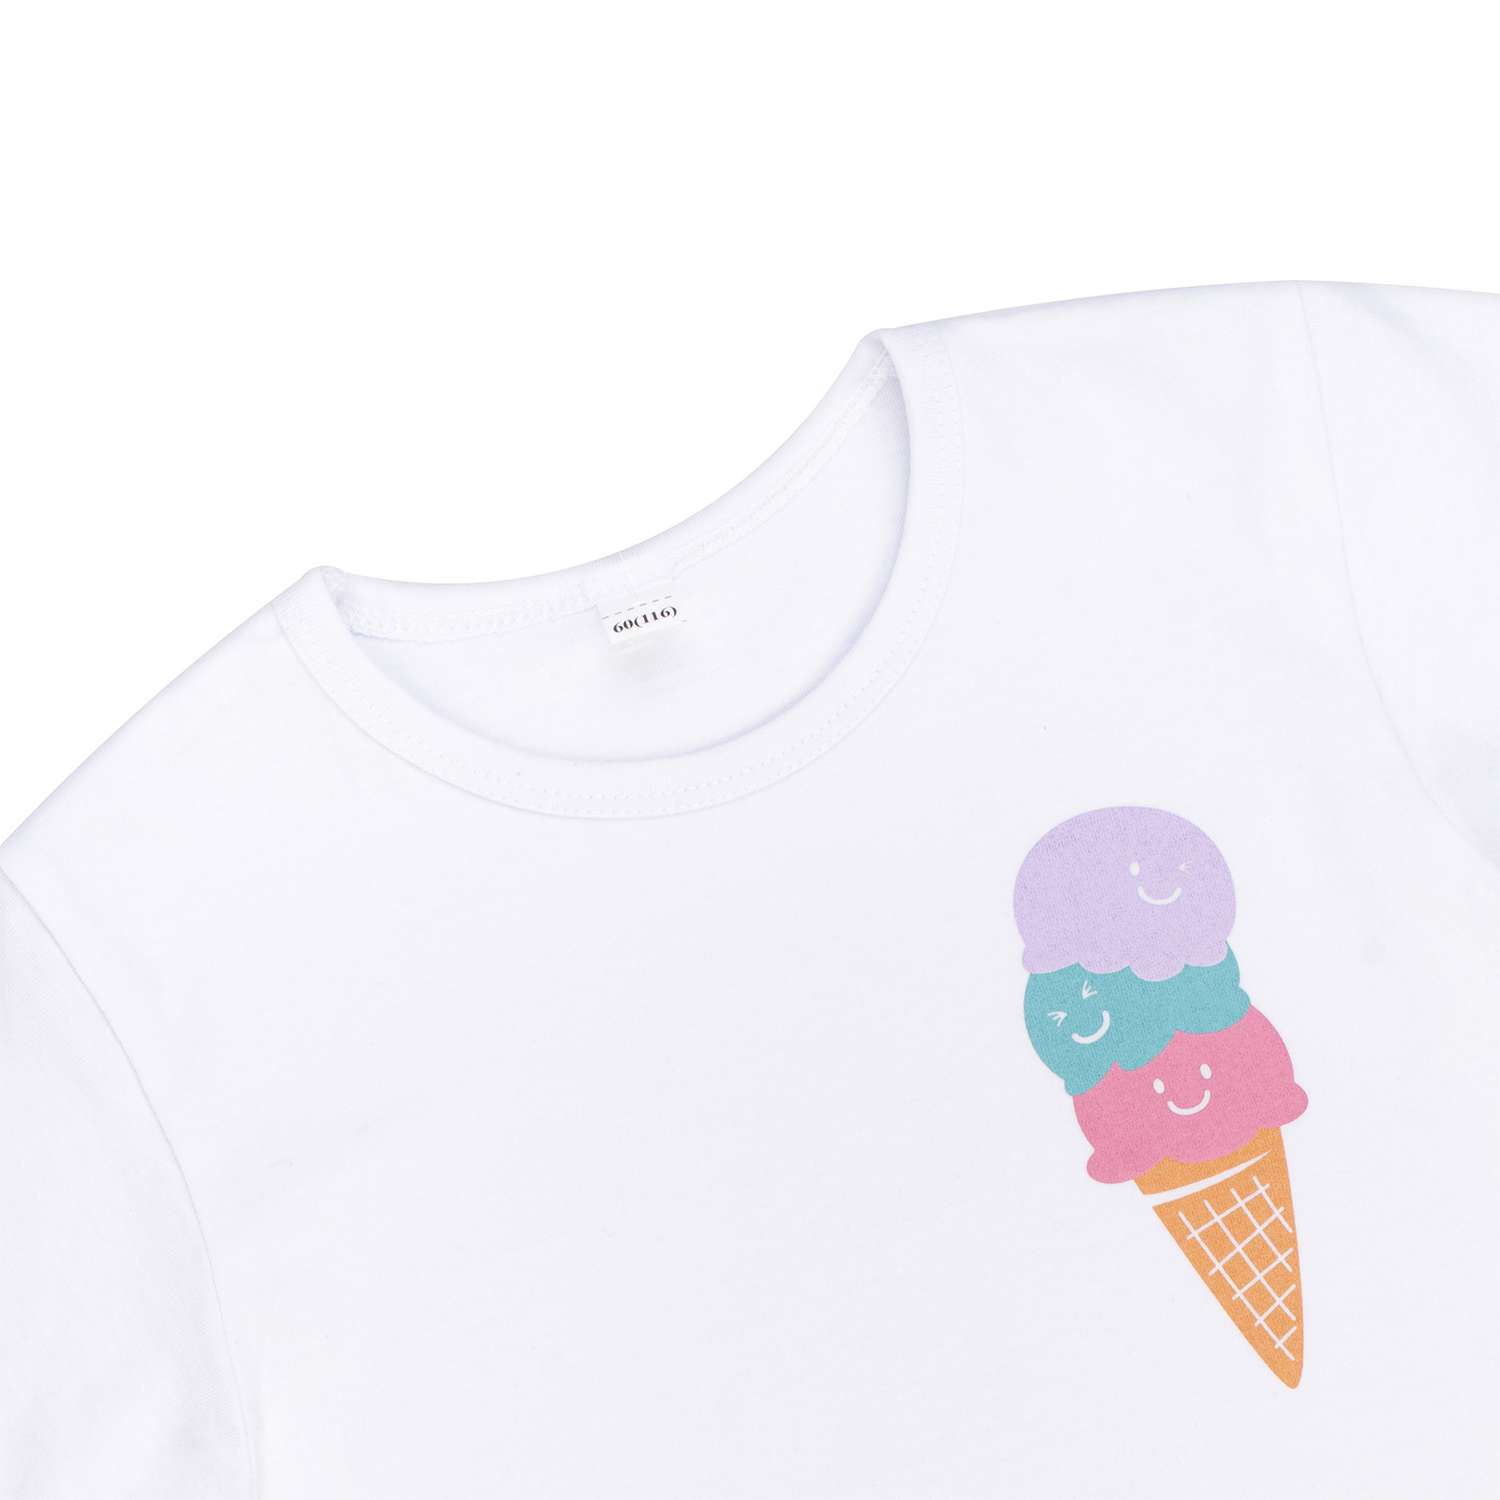 Пижама Утенок 827п/1 белый разводы мороженое - фото 16